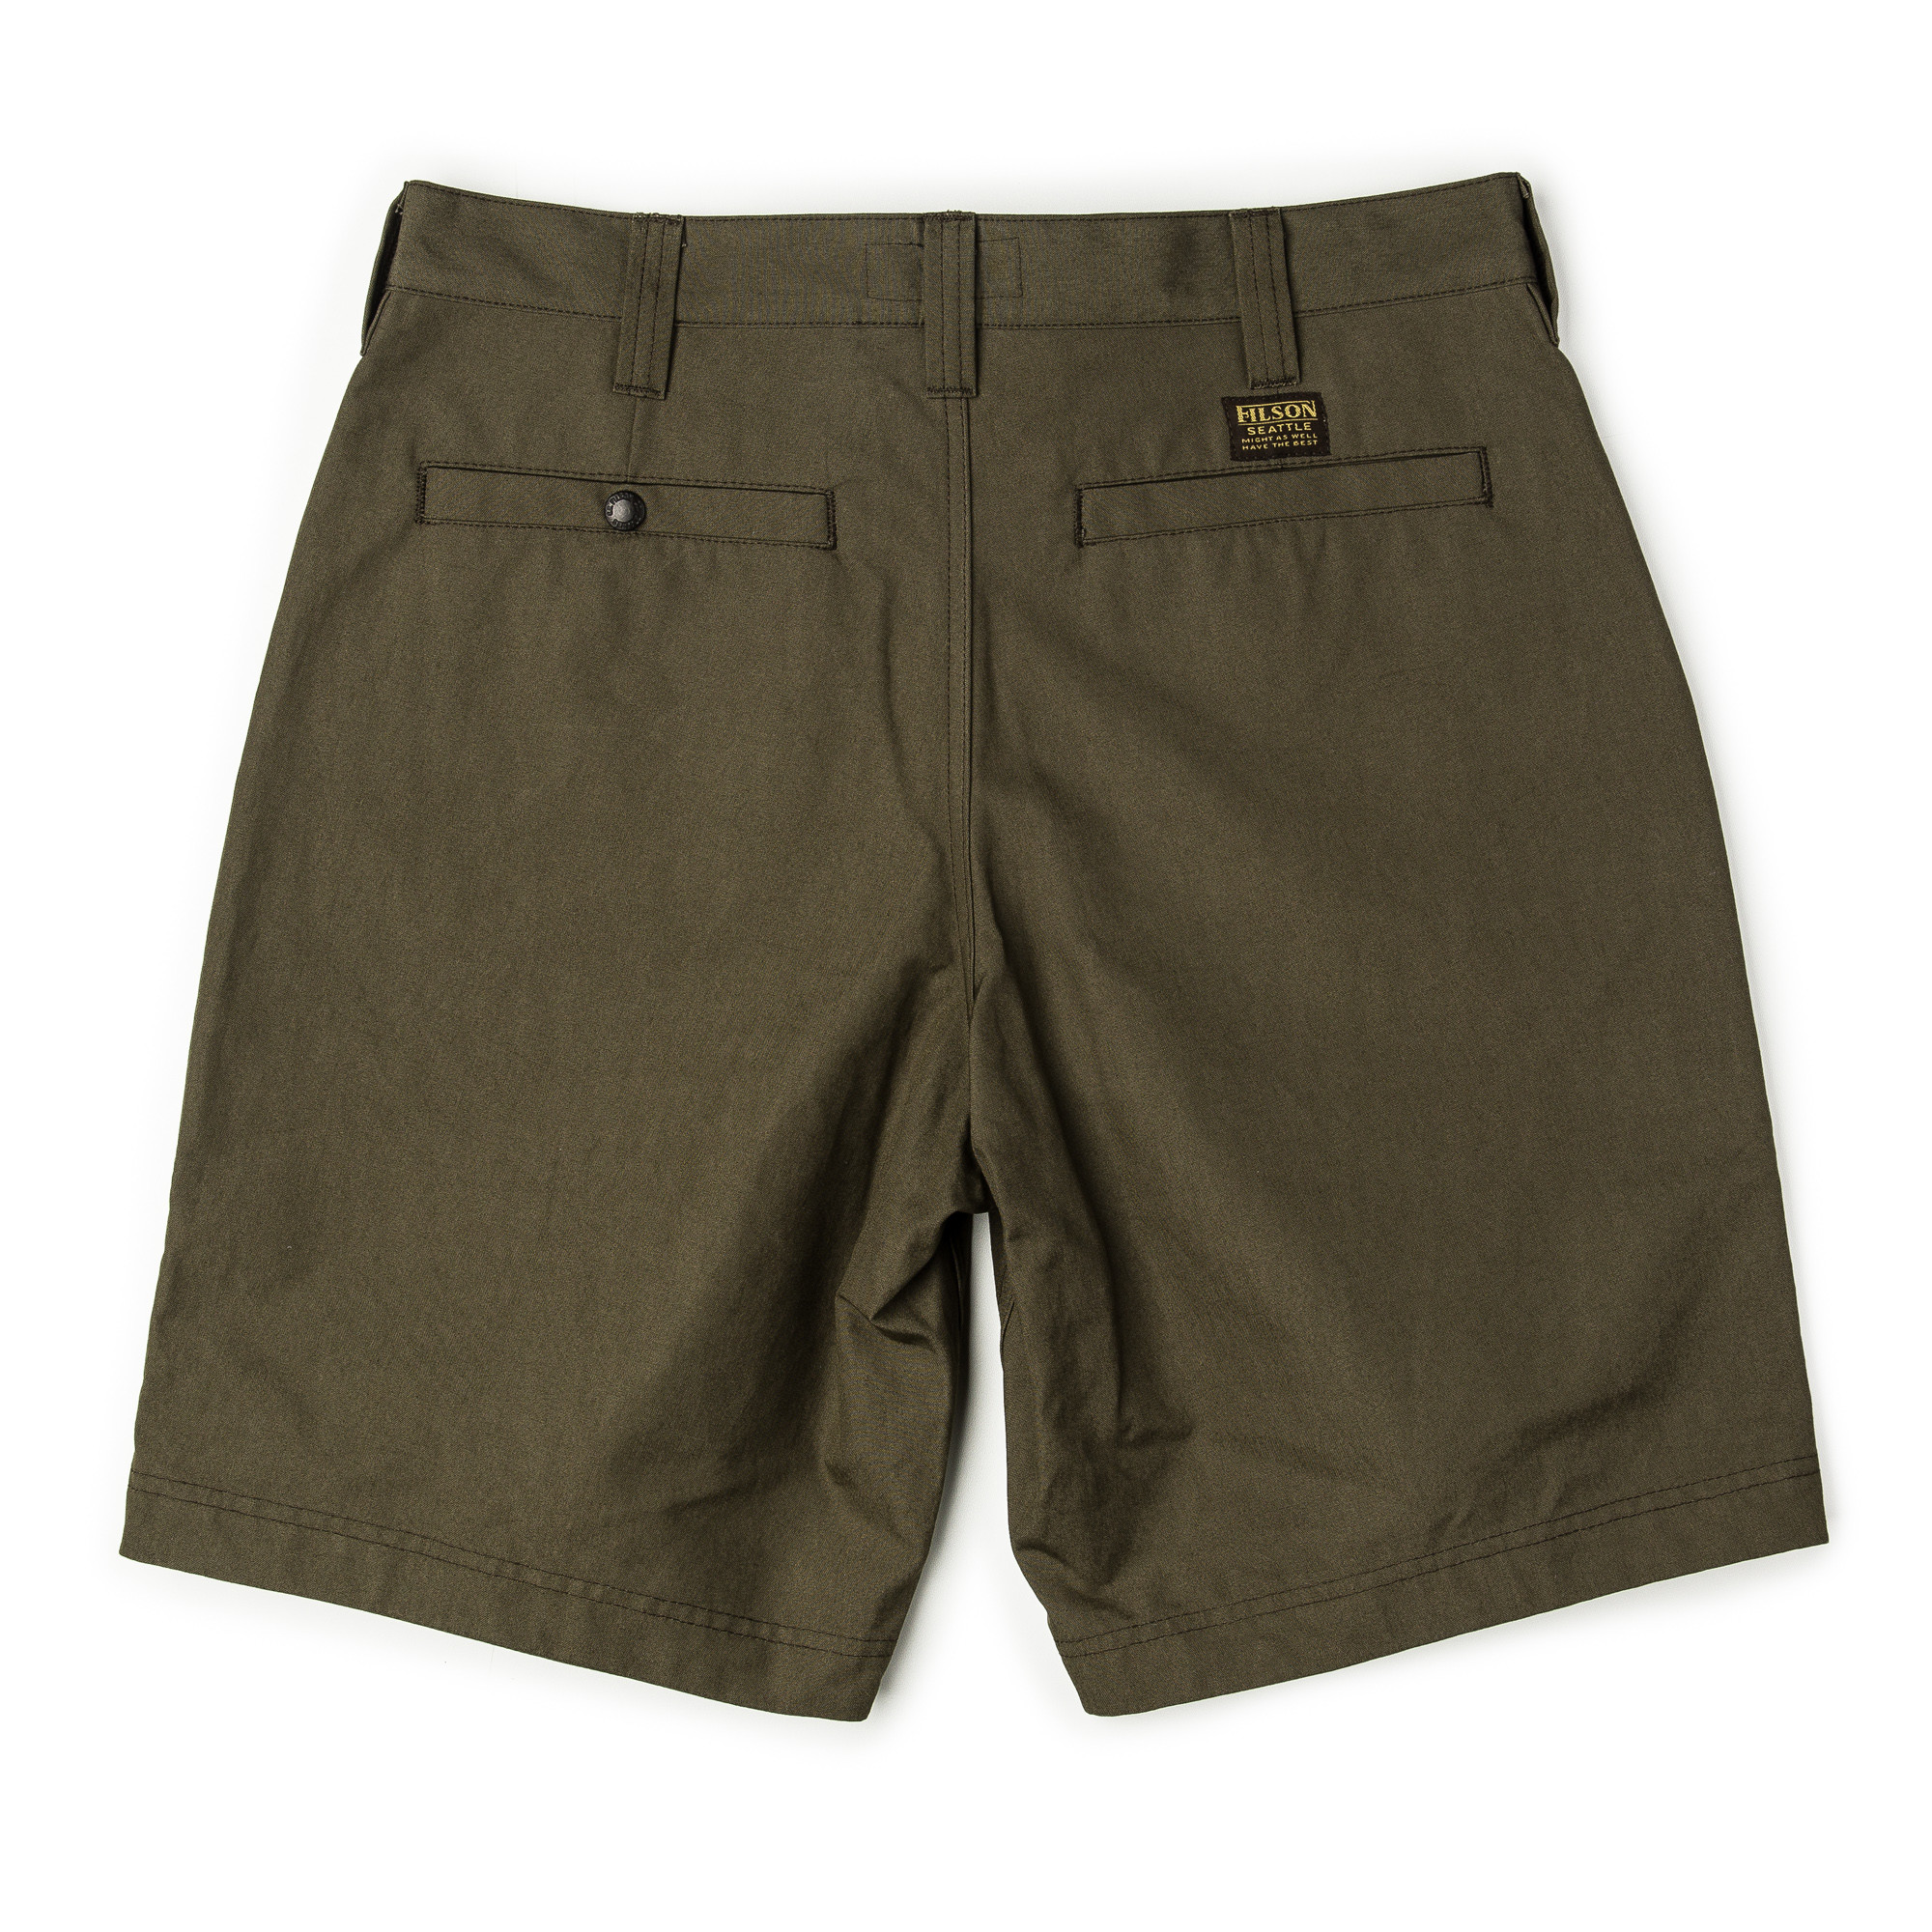 Filson - Dry Shelter Cloth Shorts - Otter Green